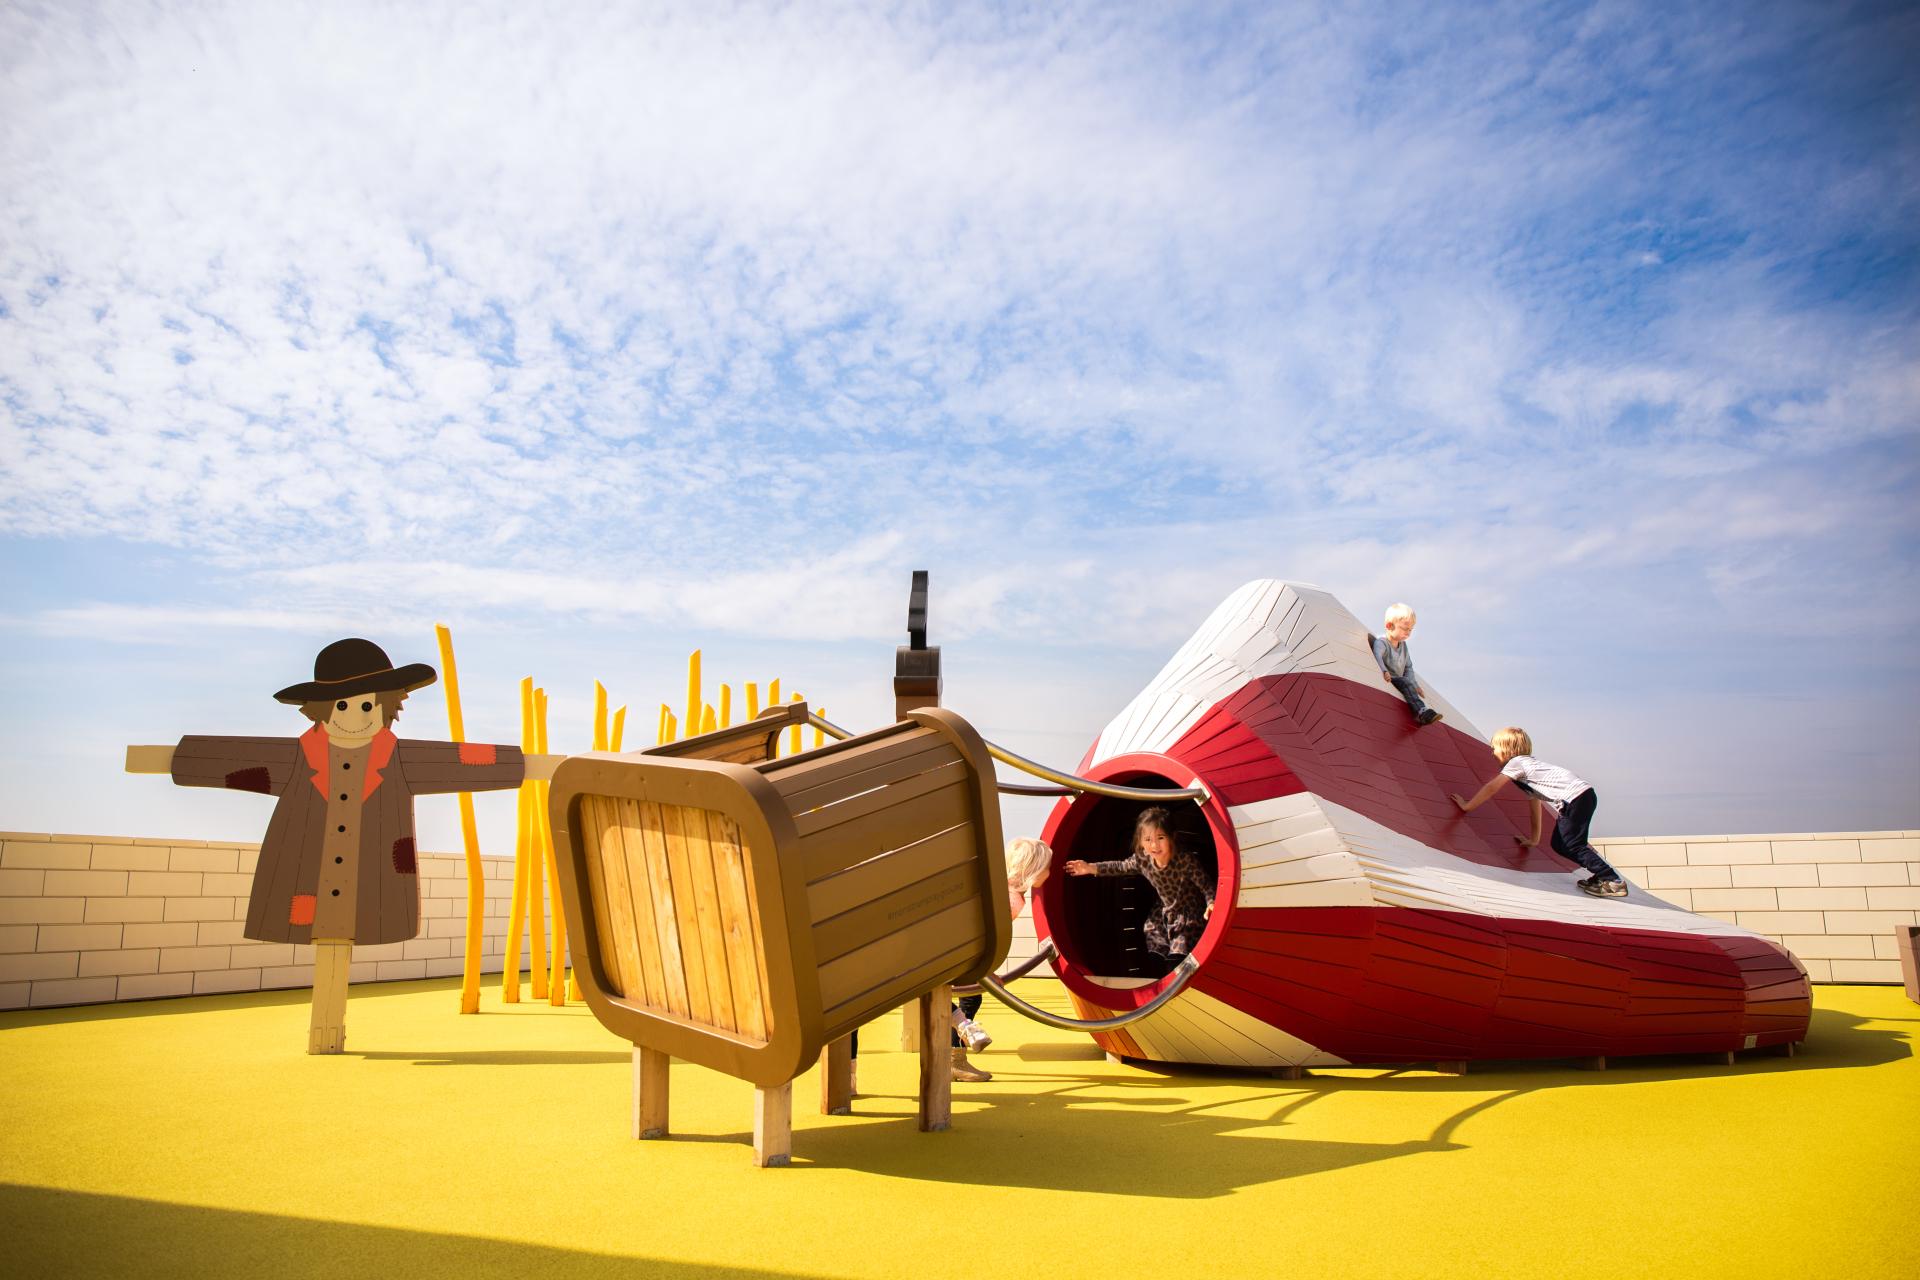 LEGOhouse cornfield airballoon LEGO MONSTRUM playground